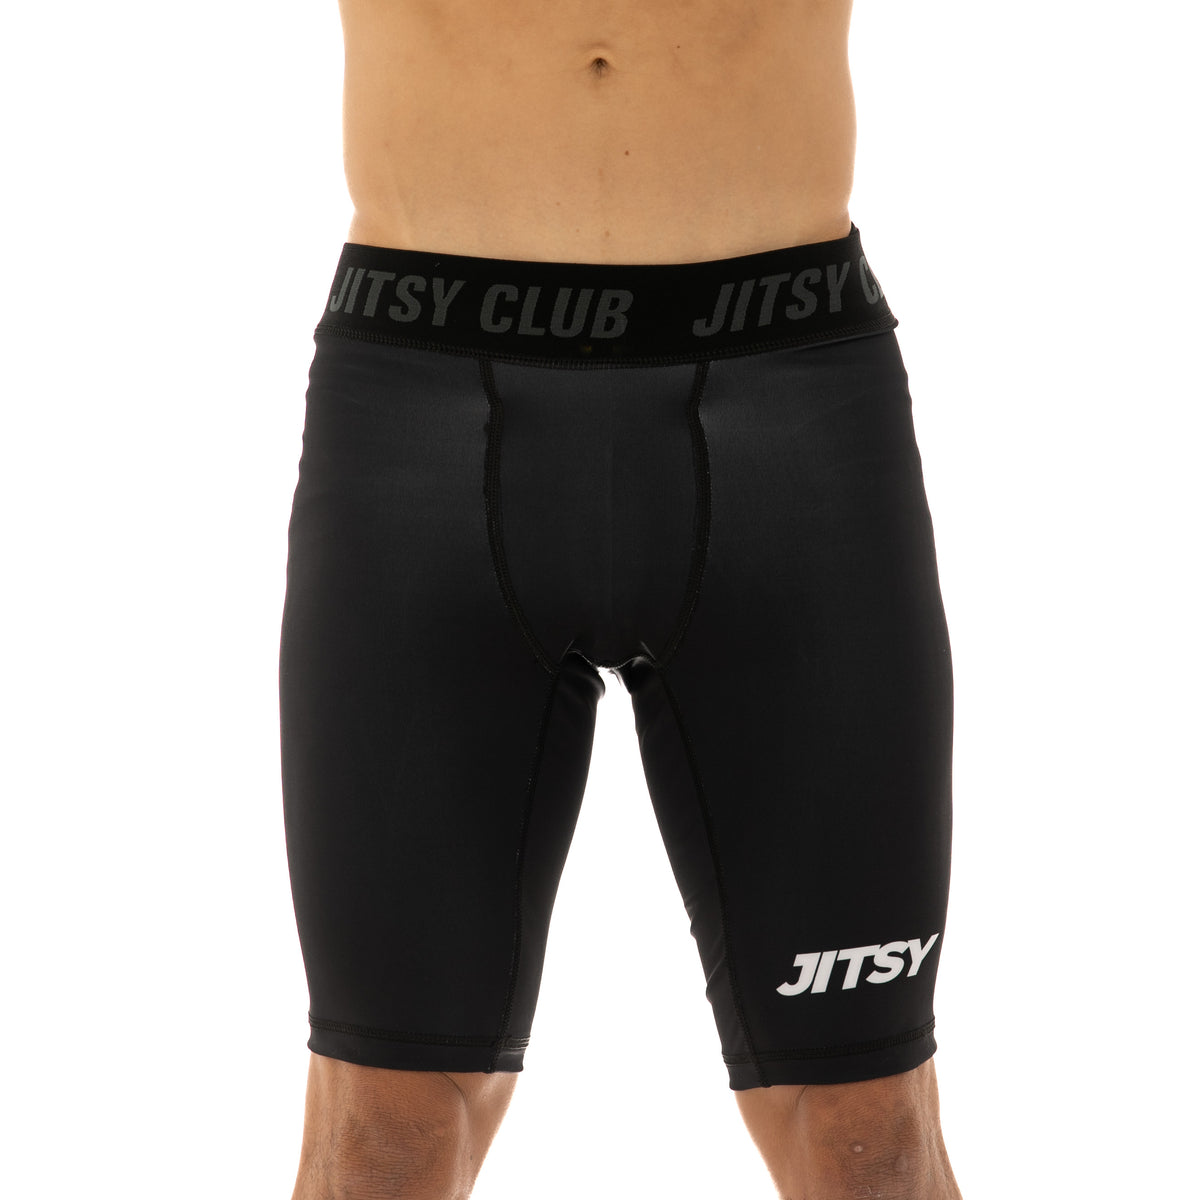 Jitsy Black Compression Shorts - Men